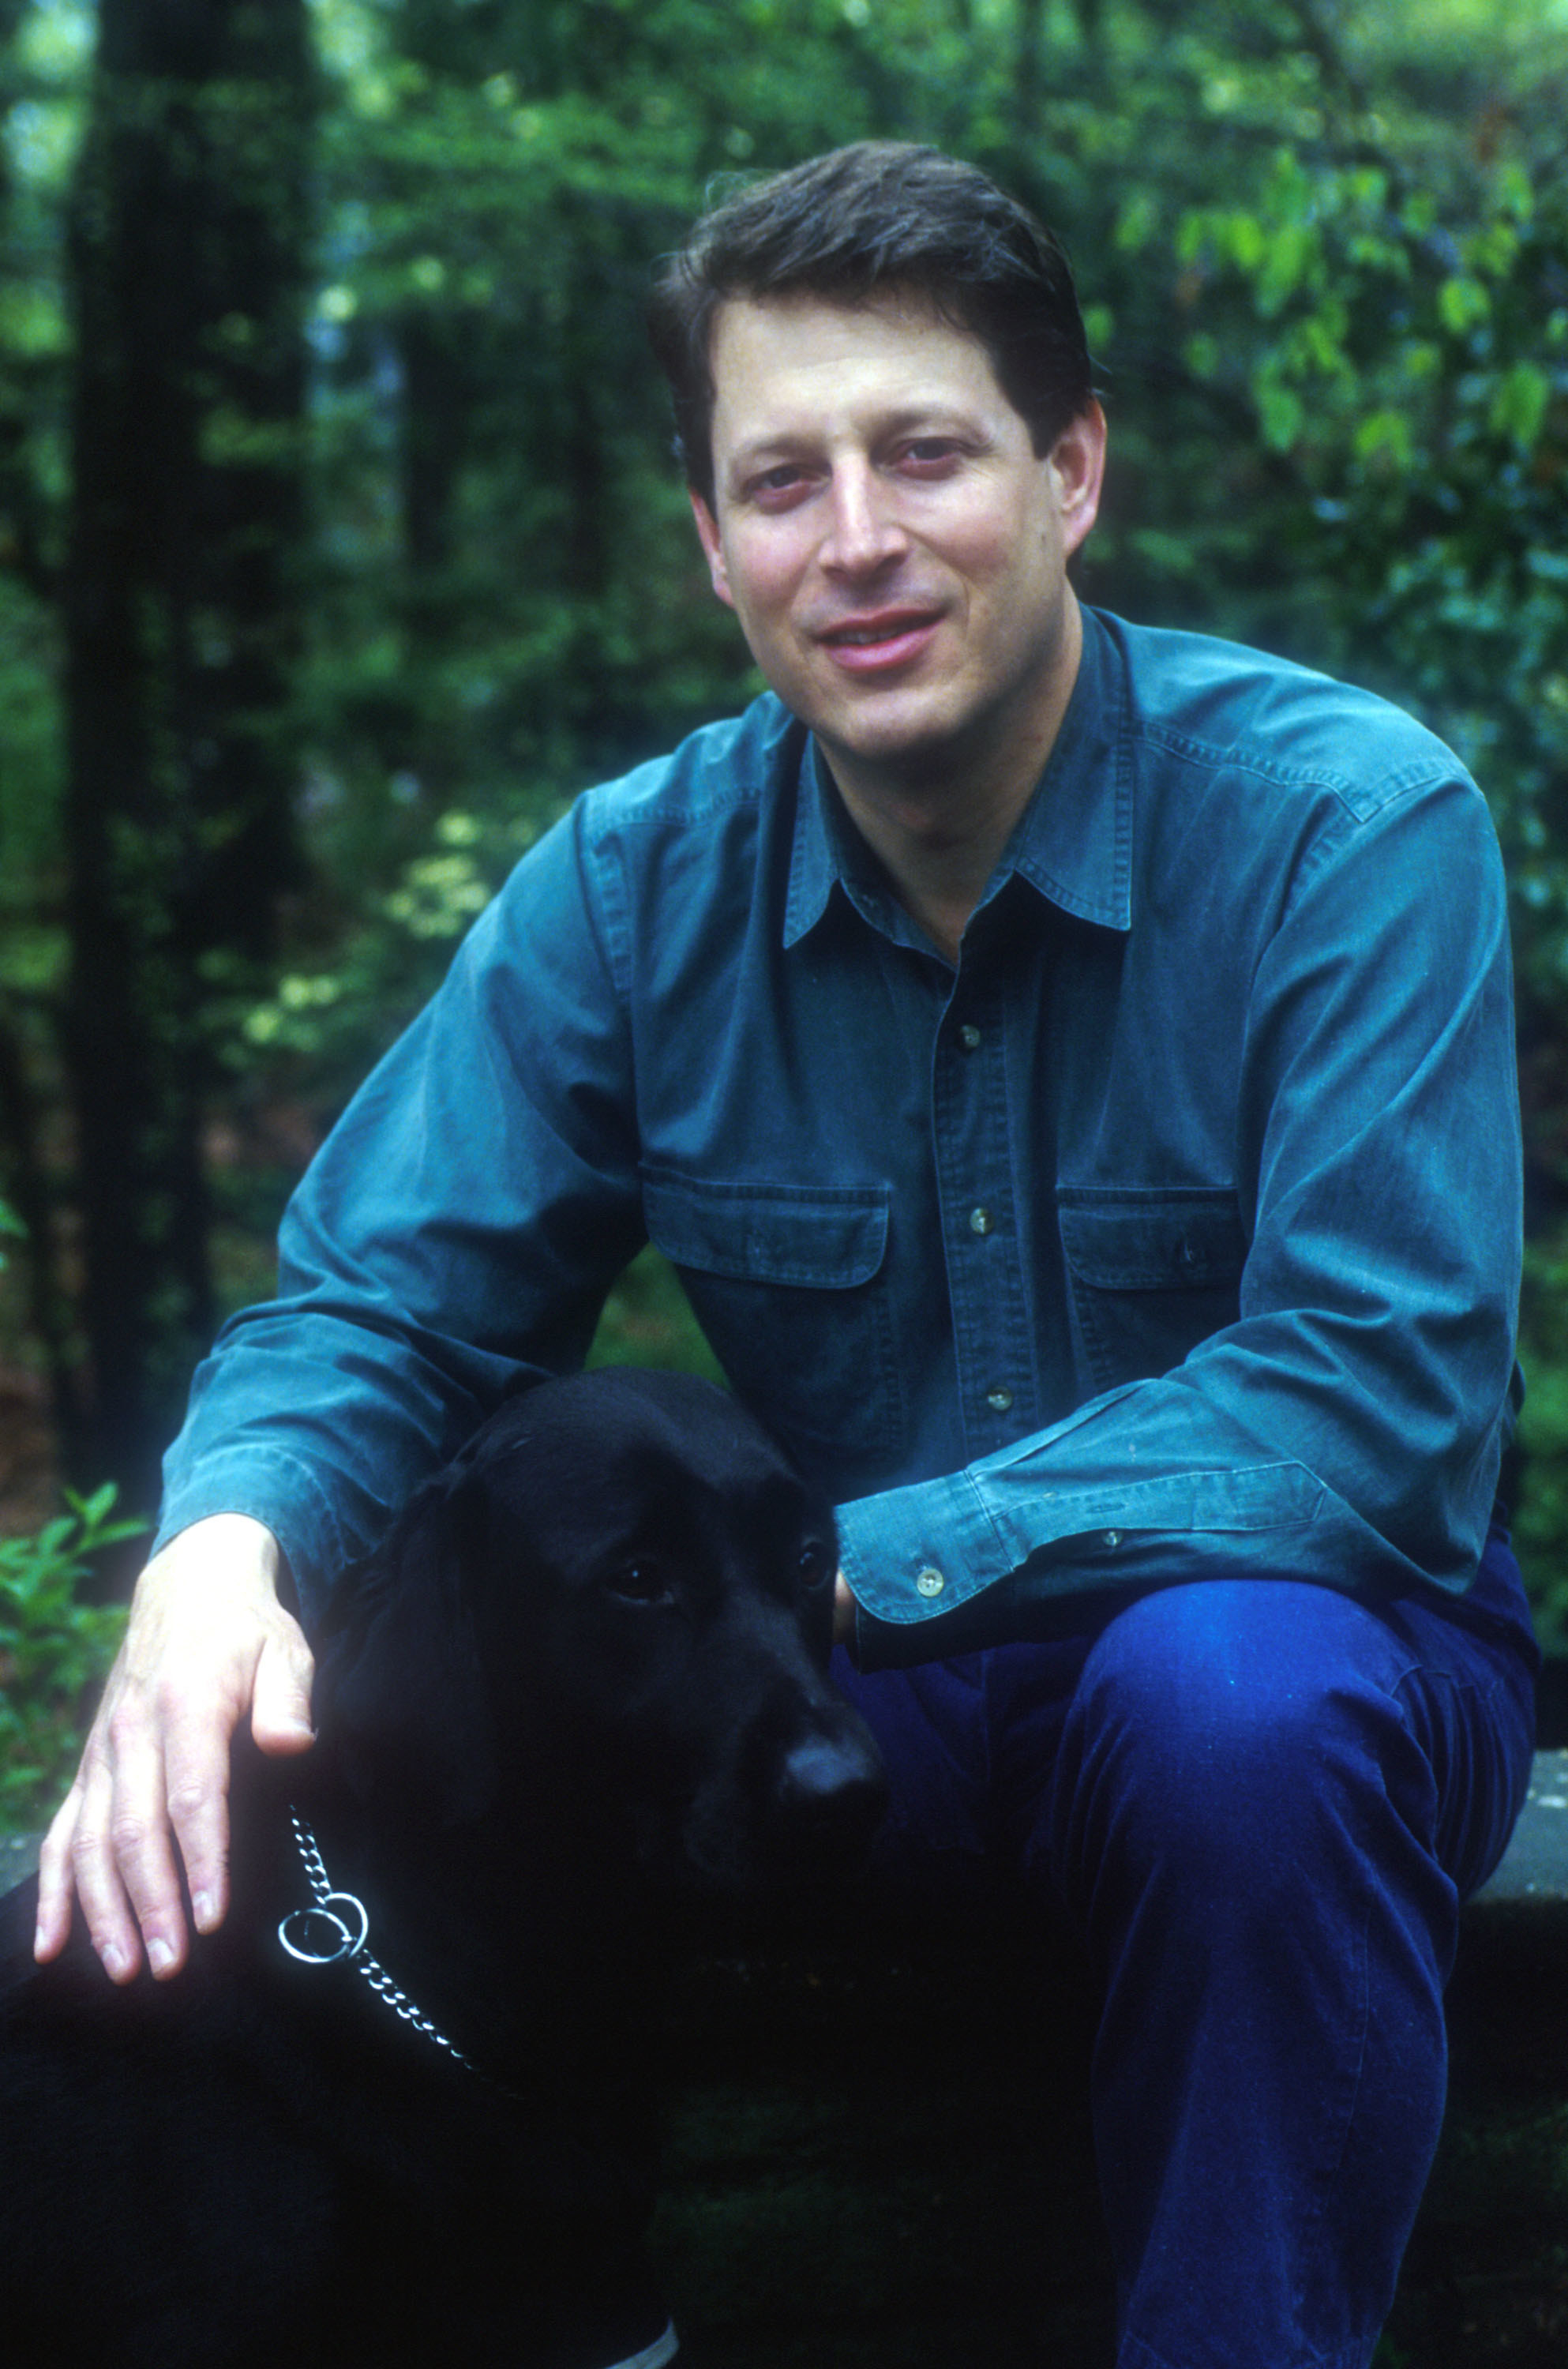 Al Gore posing with a black dog